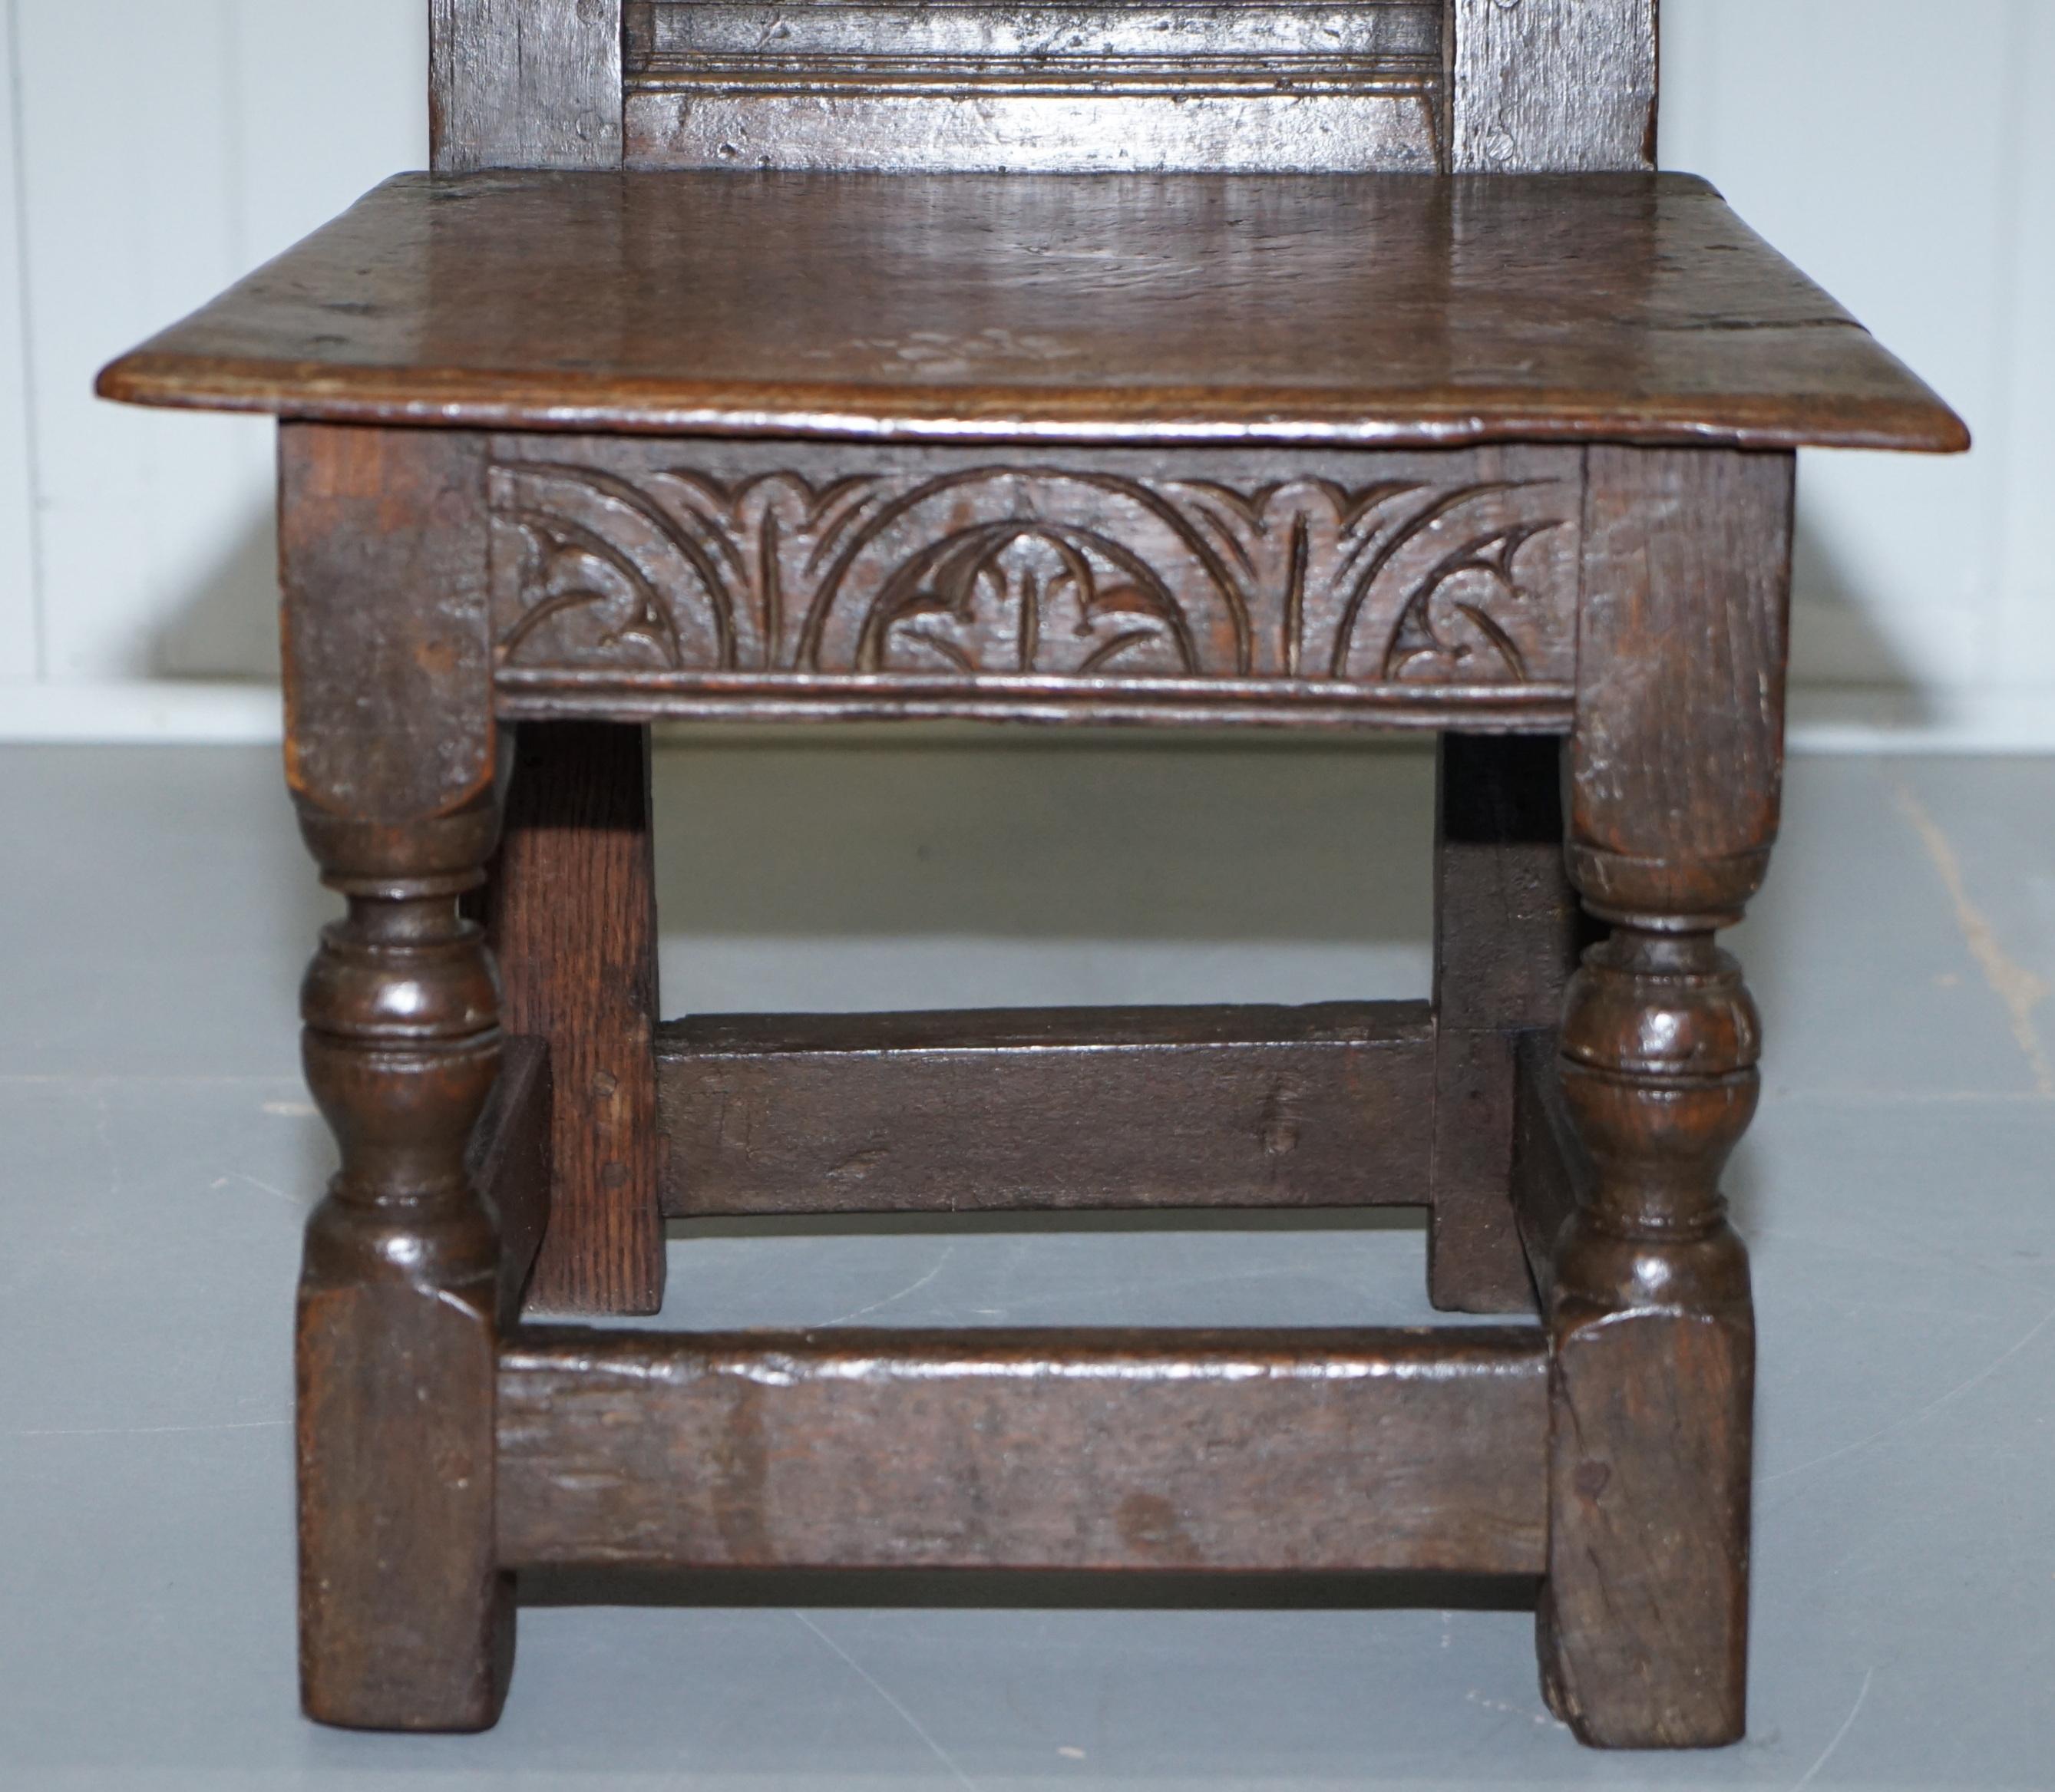 Rare circa 1760 Fruit Wood Wood Chair Nicely Carved Quite Small 18th Century Example (Chaise en bois fruitier joliment sculptée) en vente 2